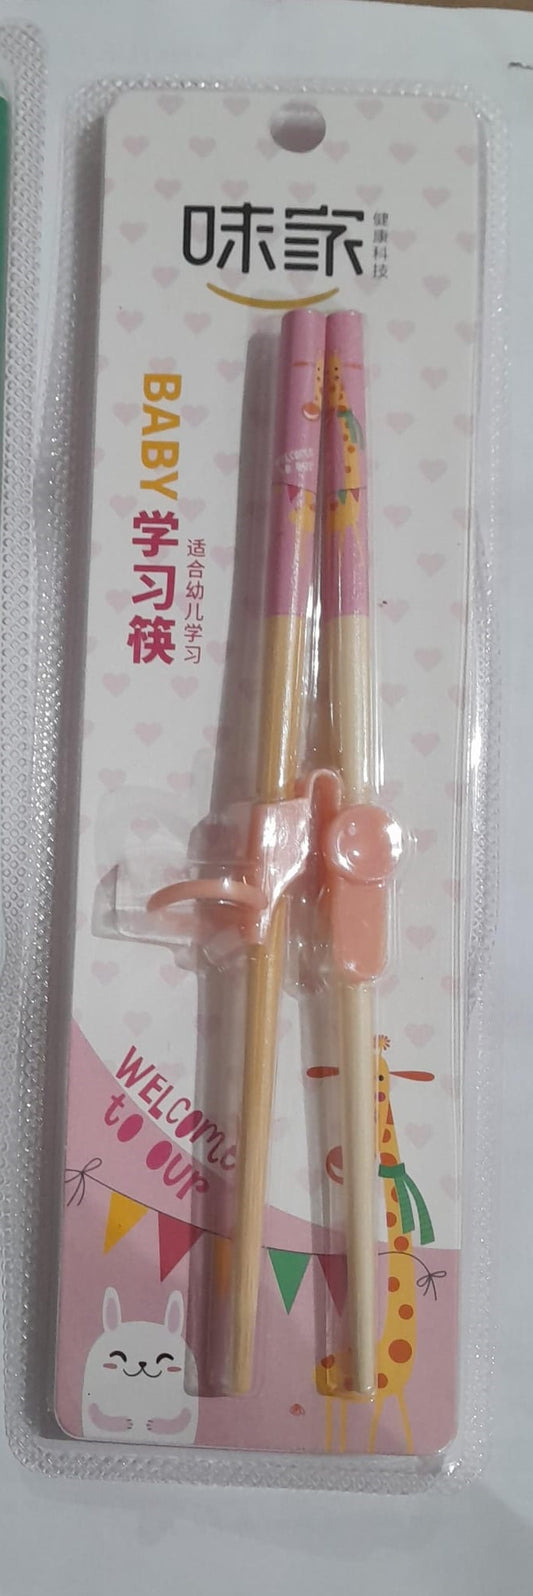 Children Chopsticks (XS3234)味家兒童學習筷 Dua tre em 1prs x 1